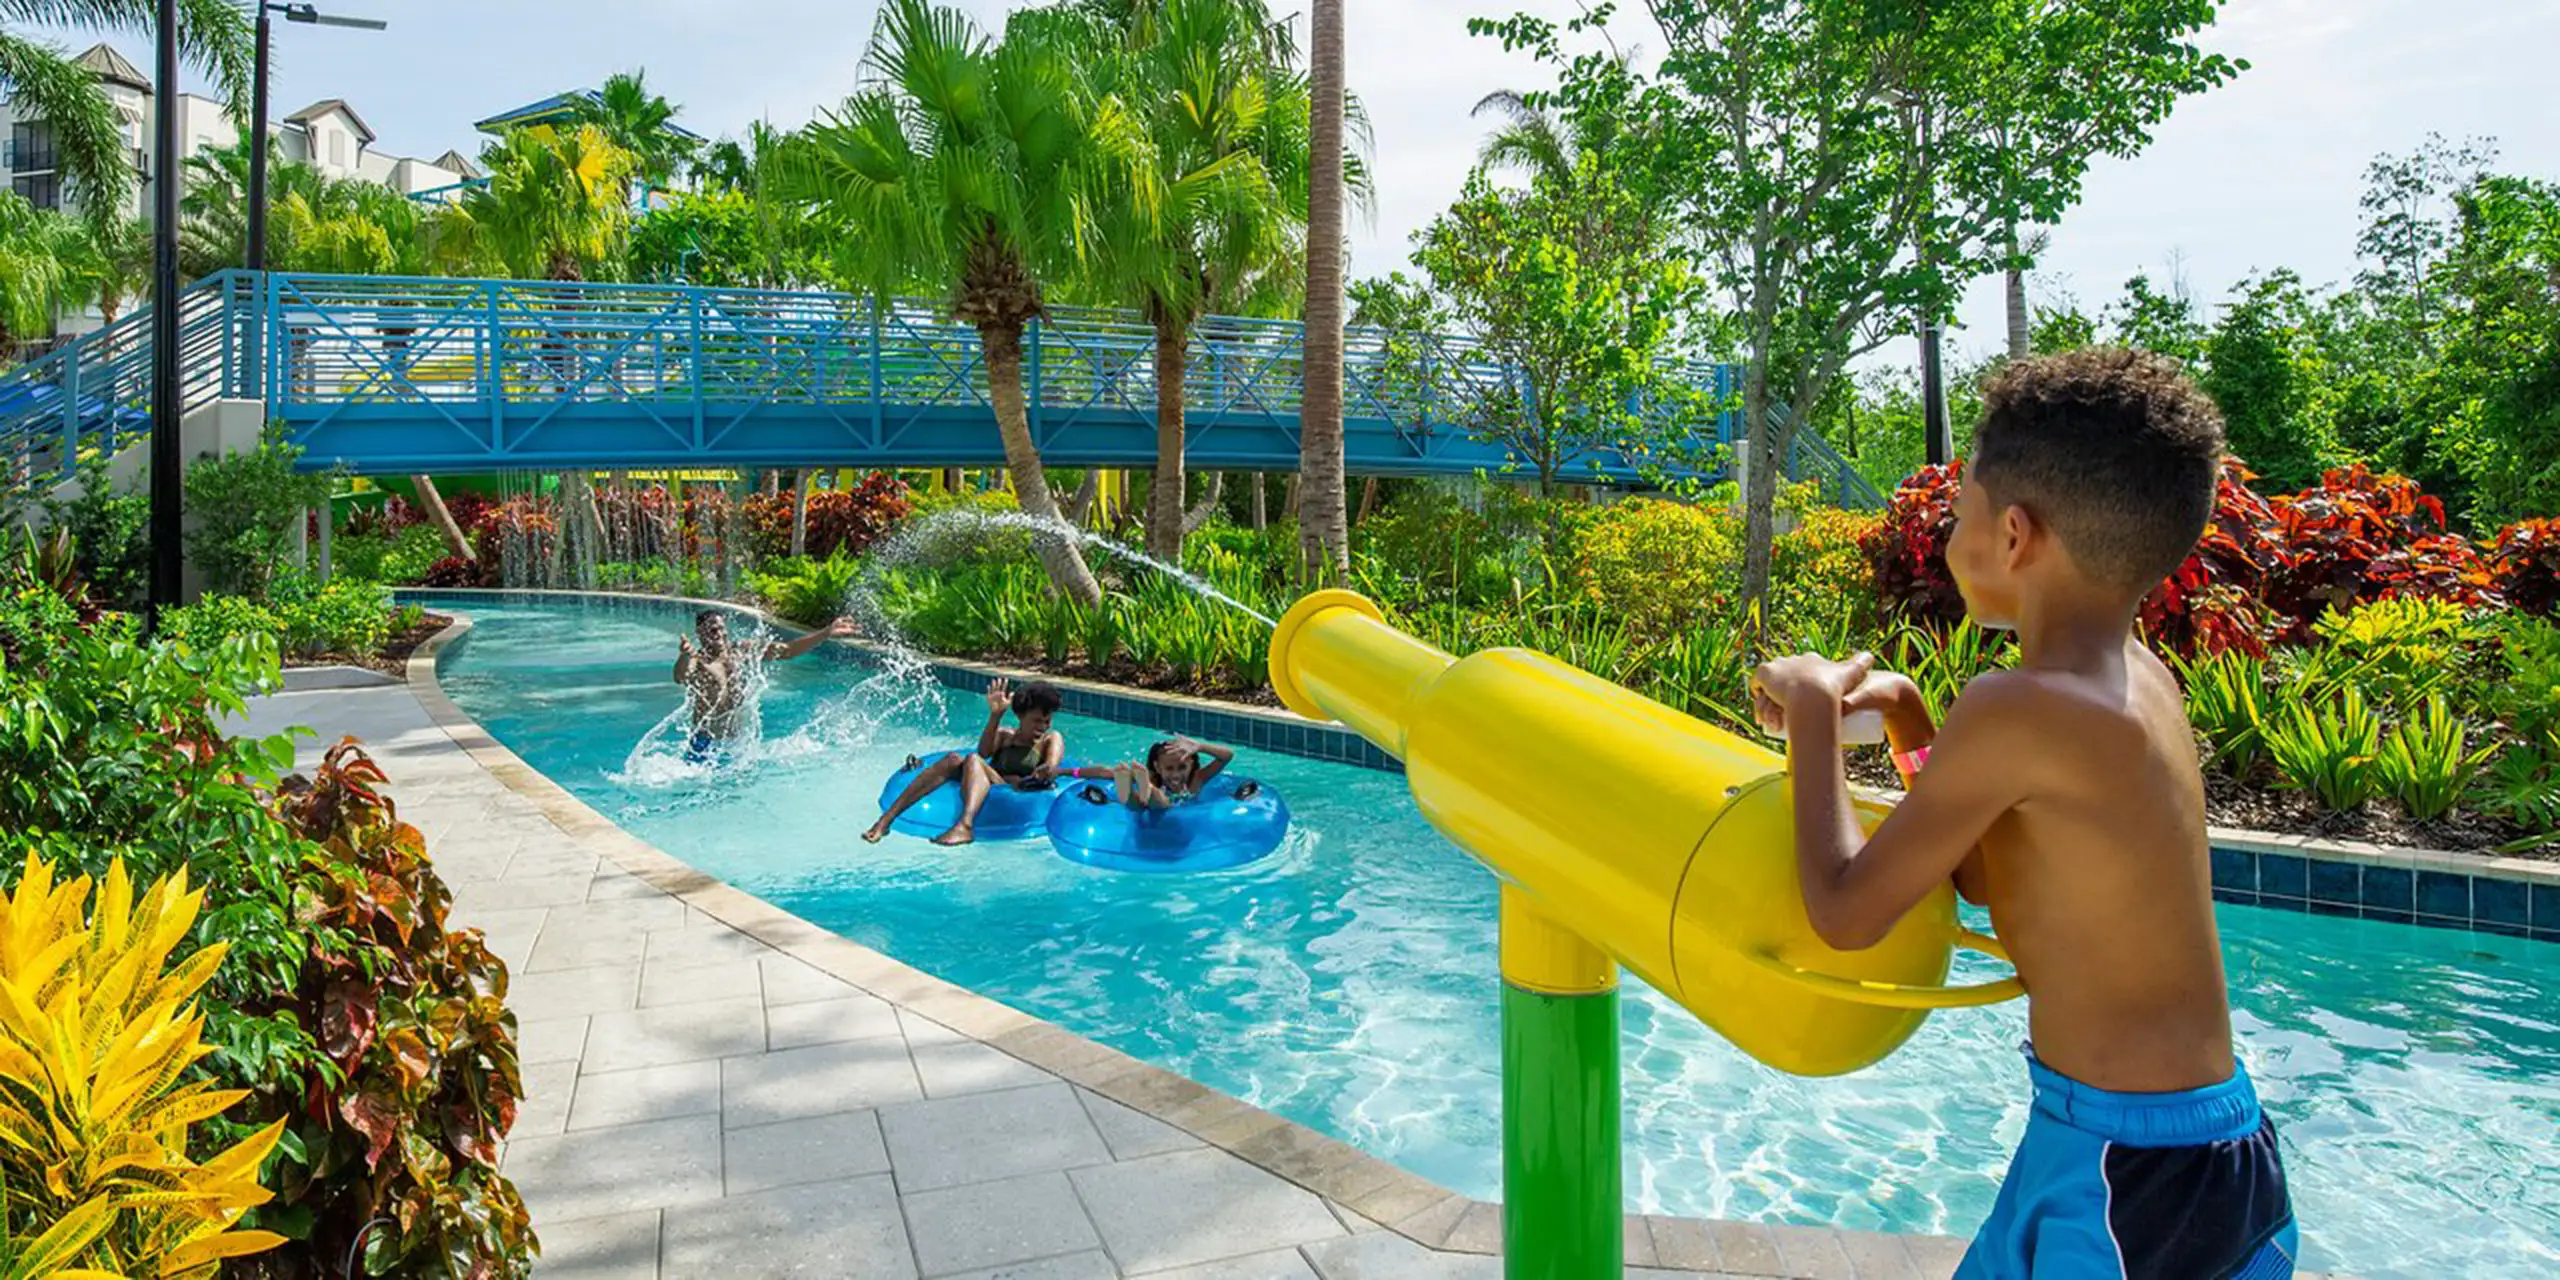 Surfari Water Park at The Grove Resort Orlando; Courtesy of The Grove Resort Orlando